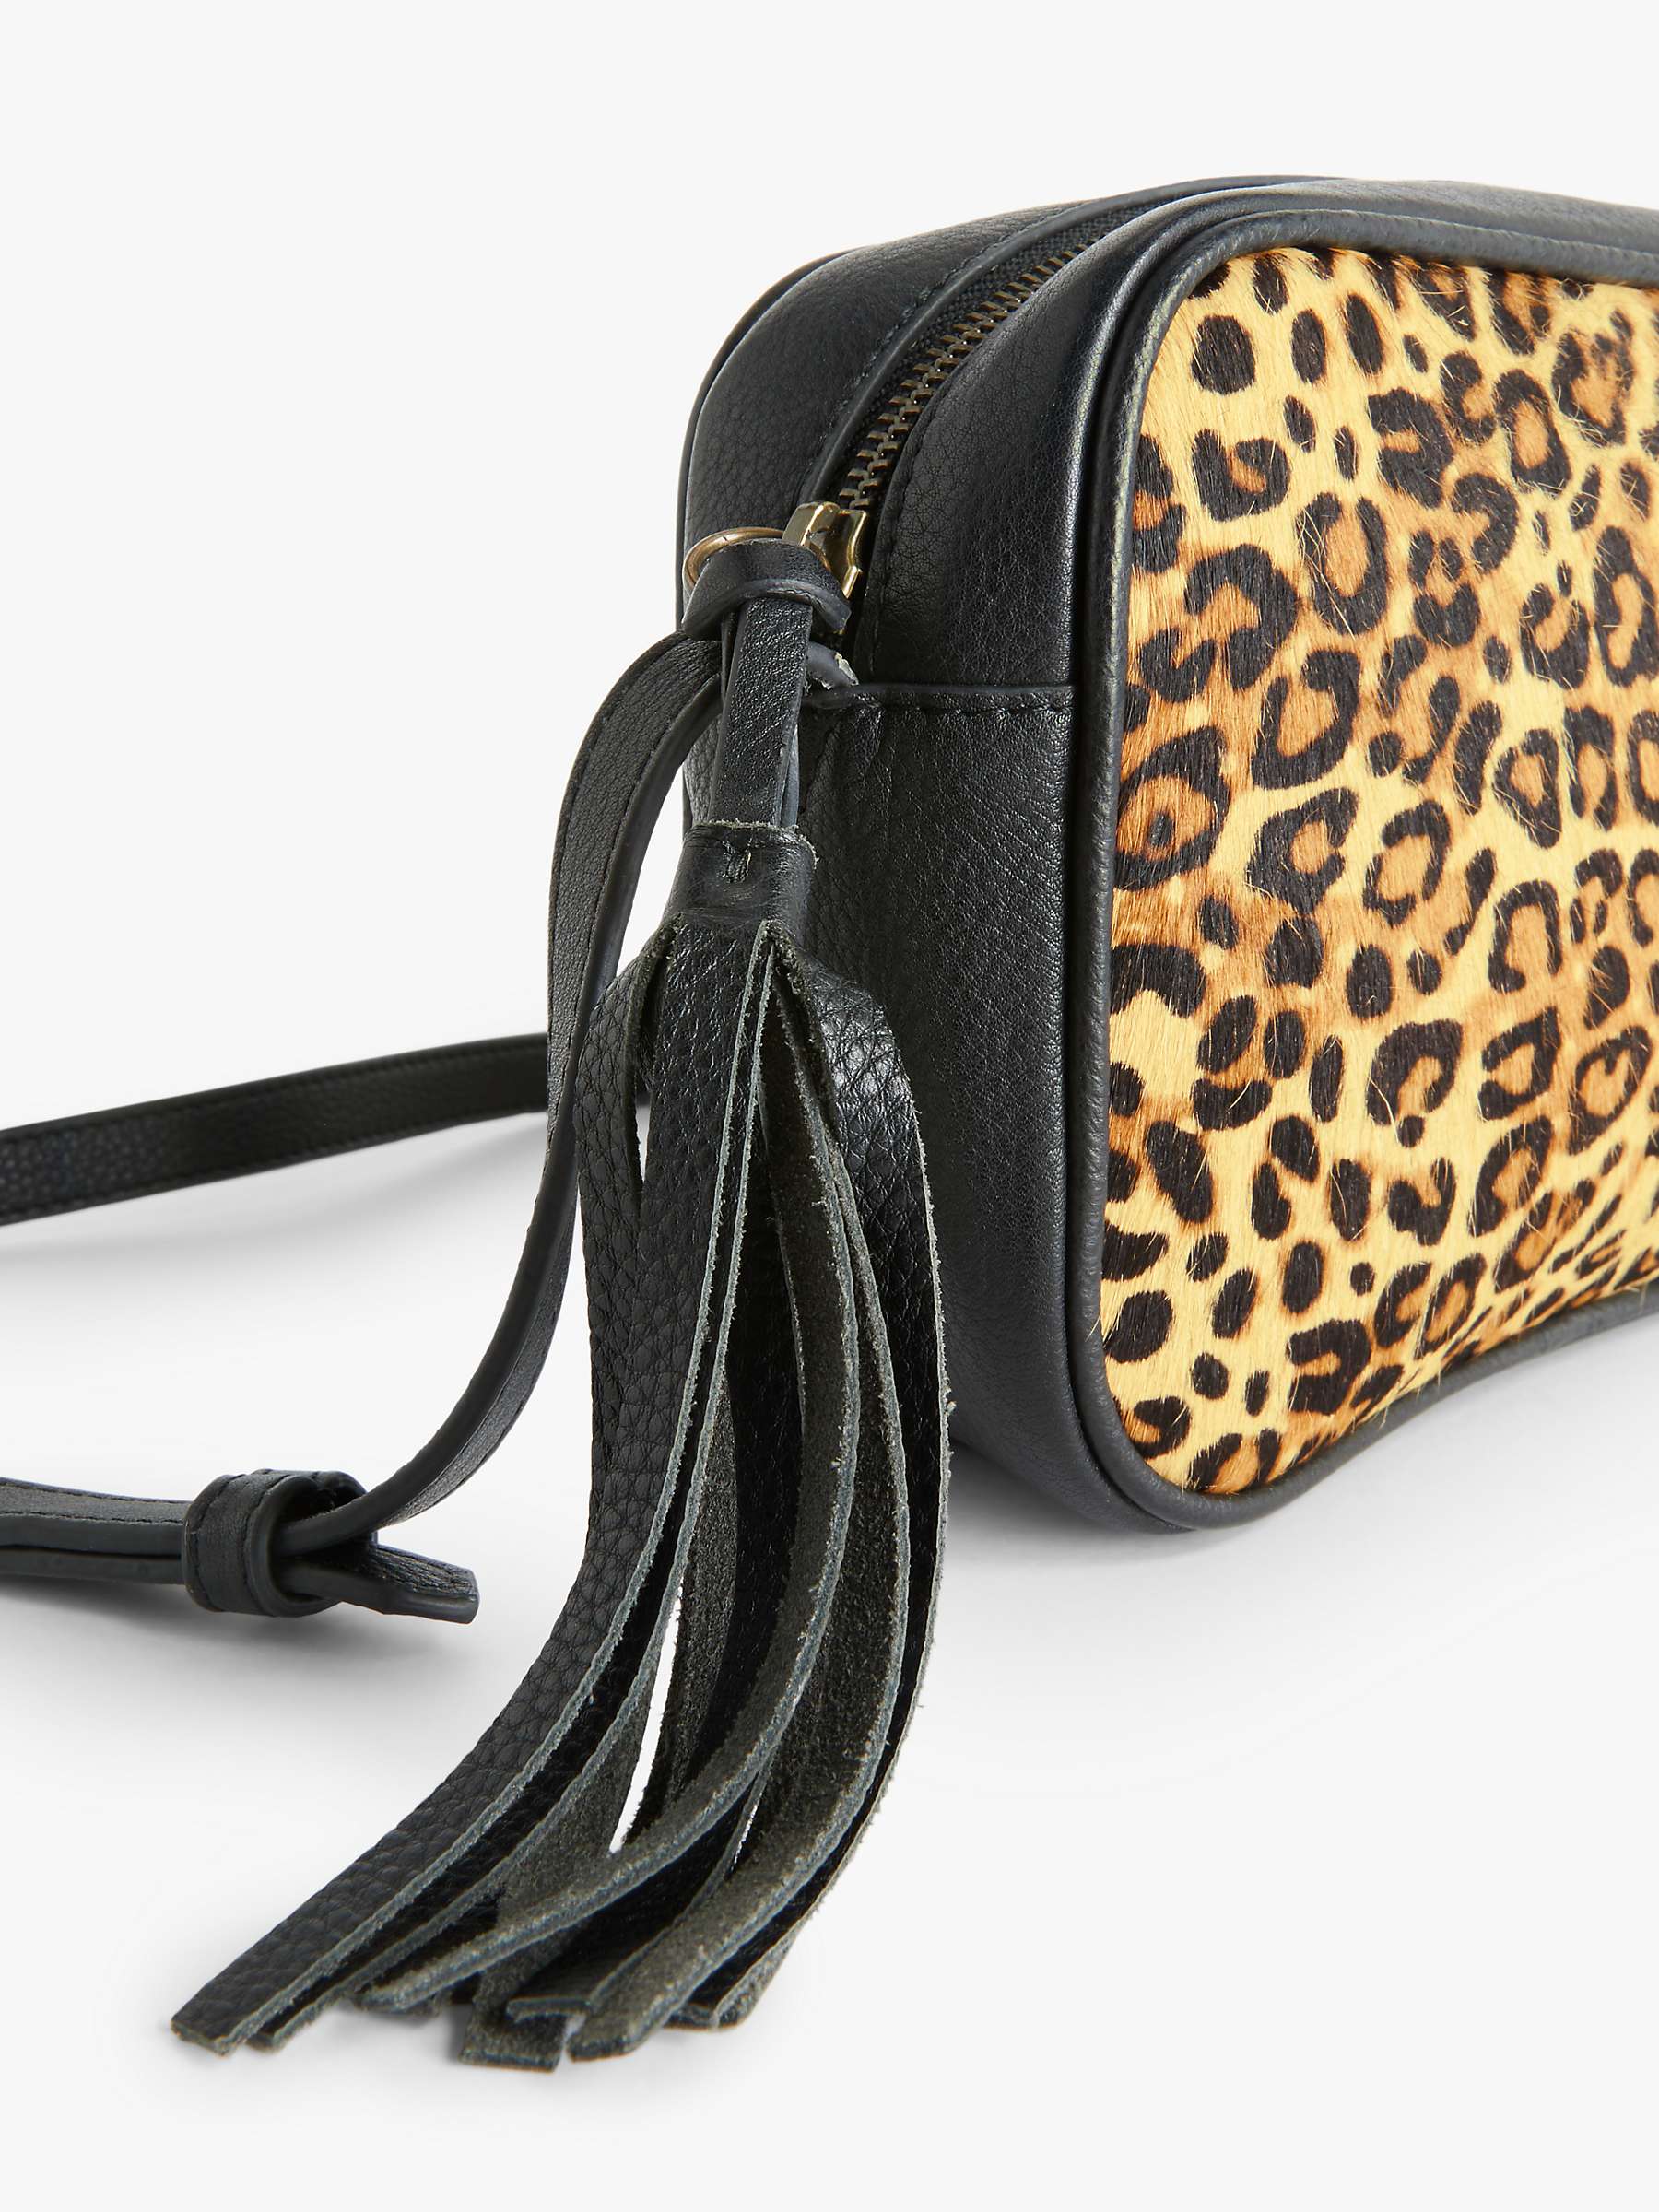 Bags & Purses Handbags Wristlets Leopard print clutch 